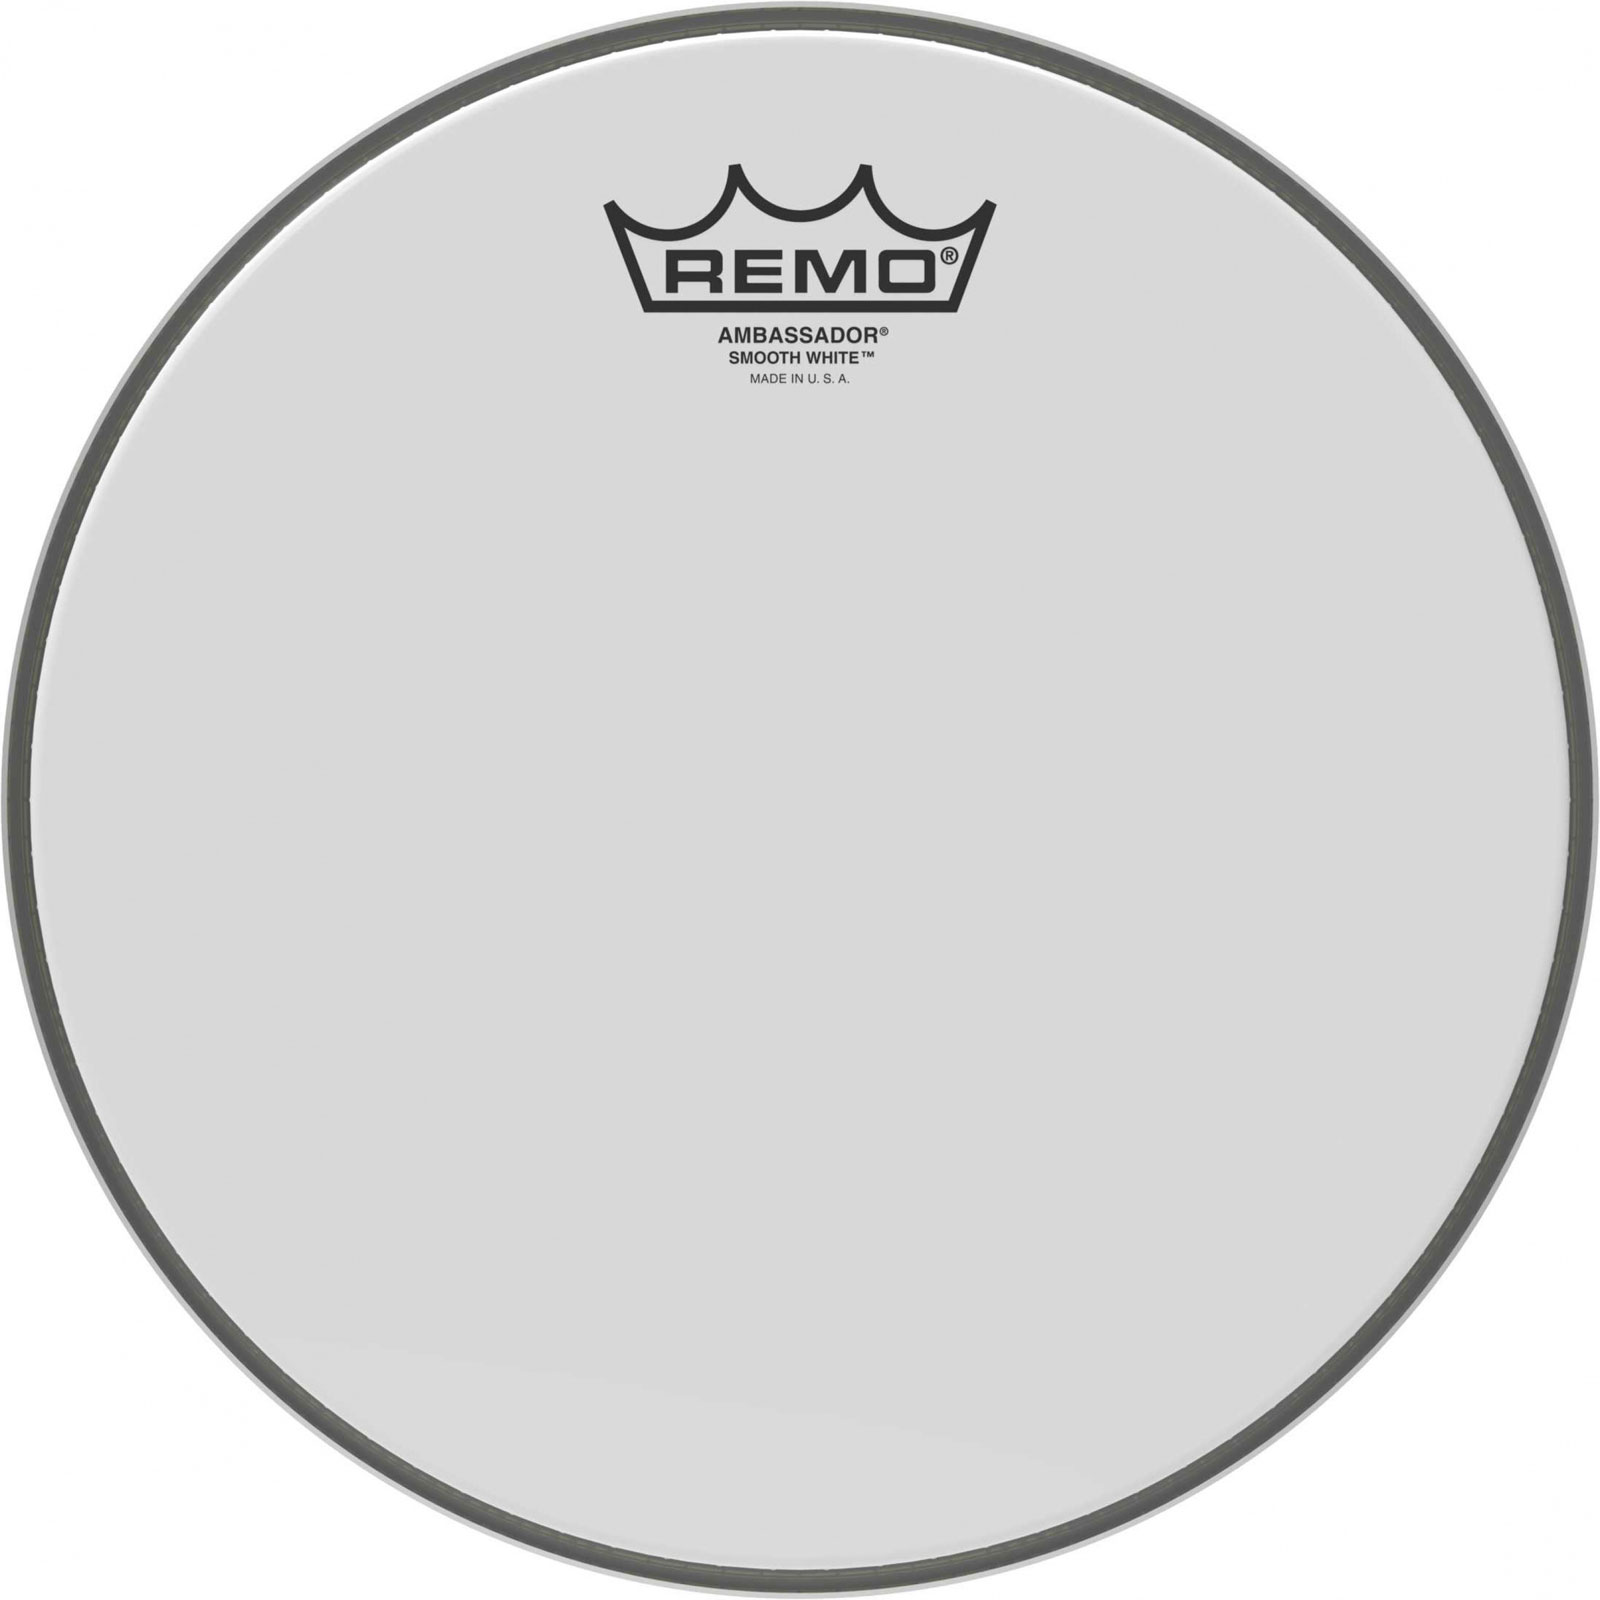 REMO AMBASSADOR 10 - SMOOTH WHITE - BA-0210-00